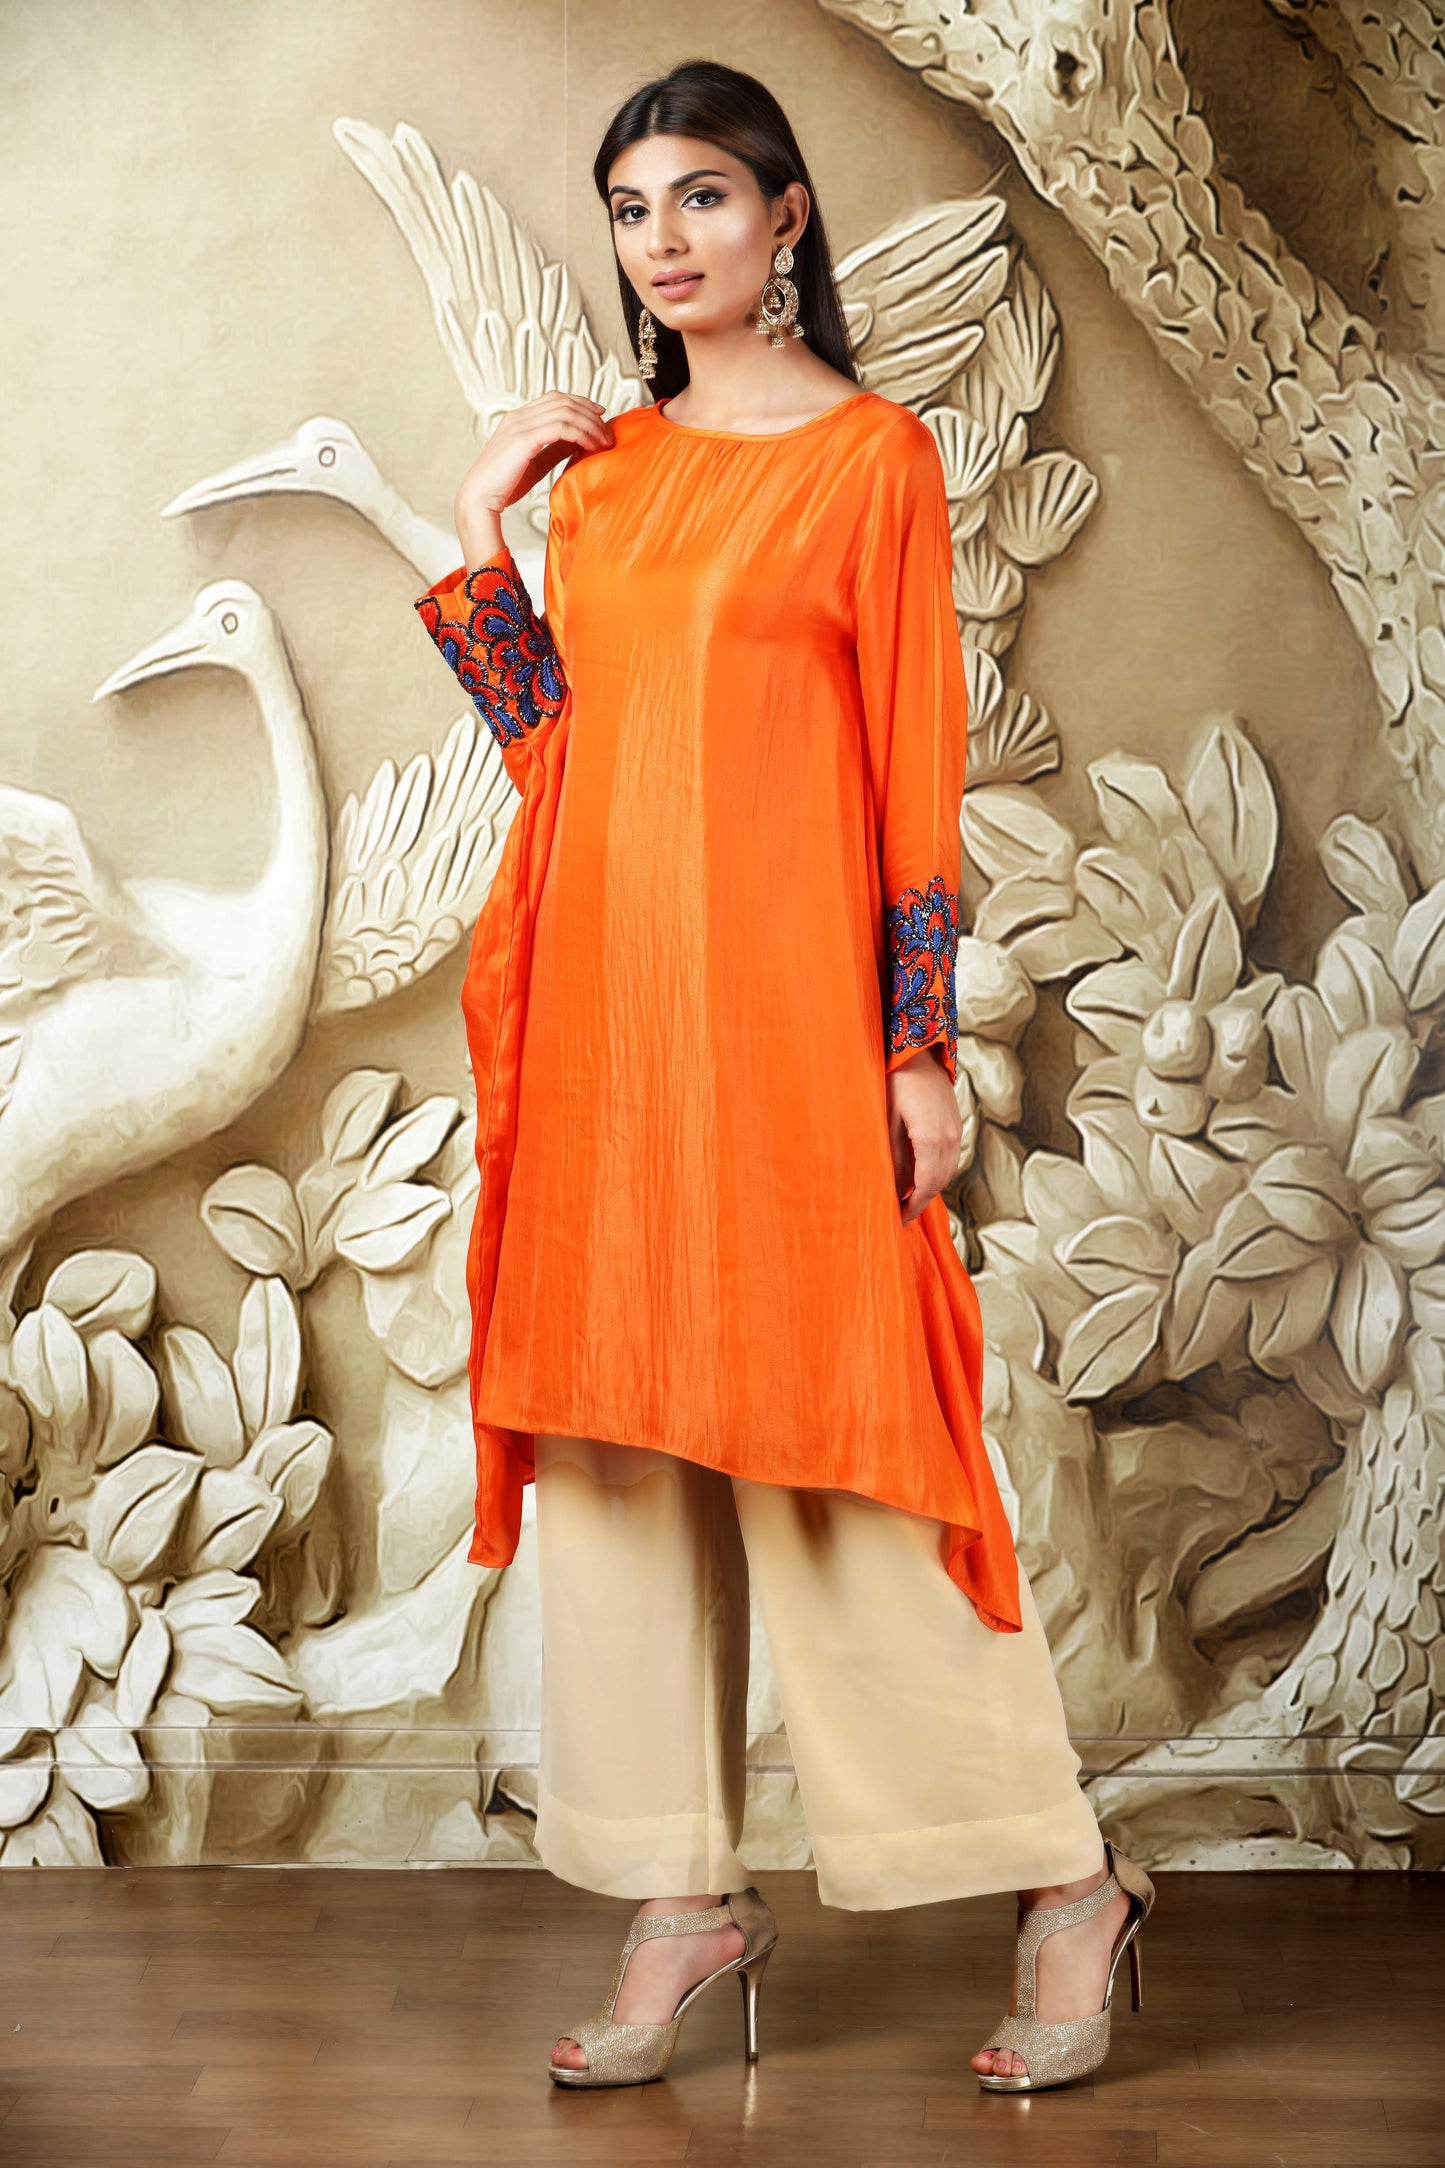 Birds of paradise-kaftan dress - www.styletriggers.com